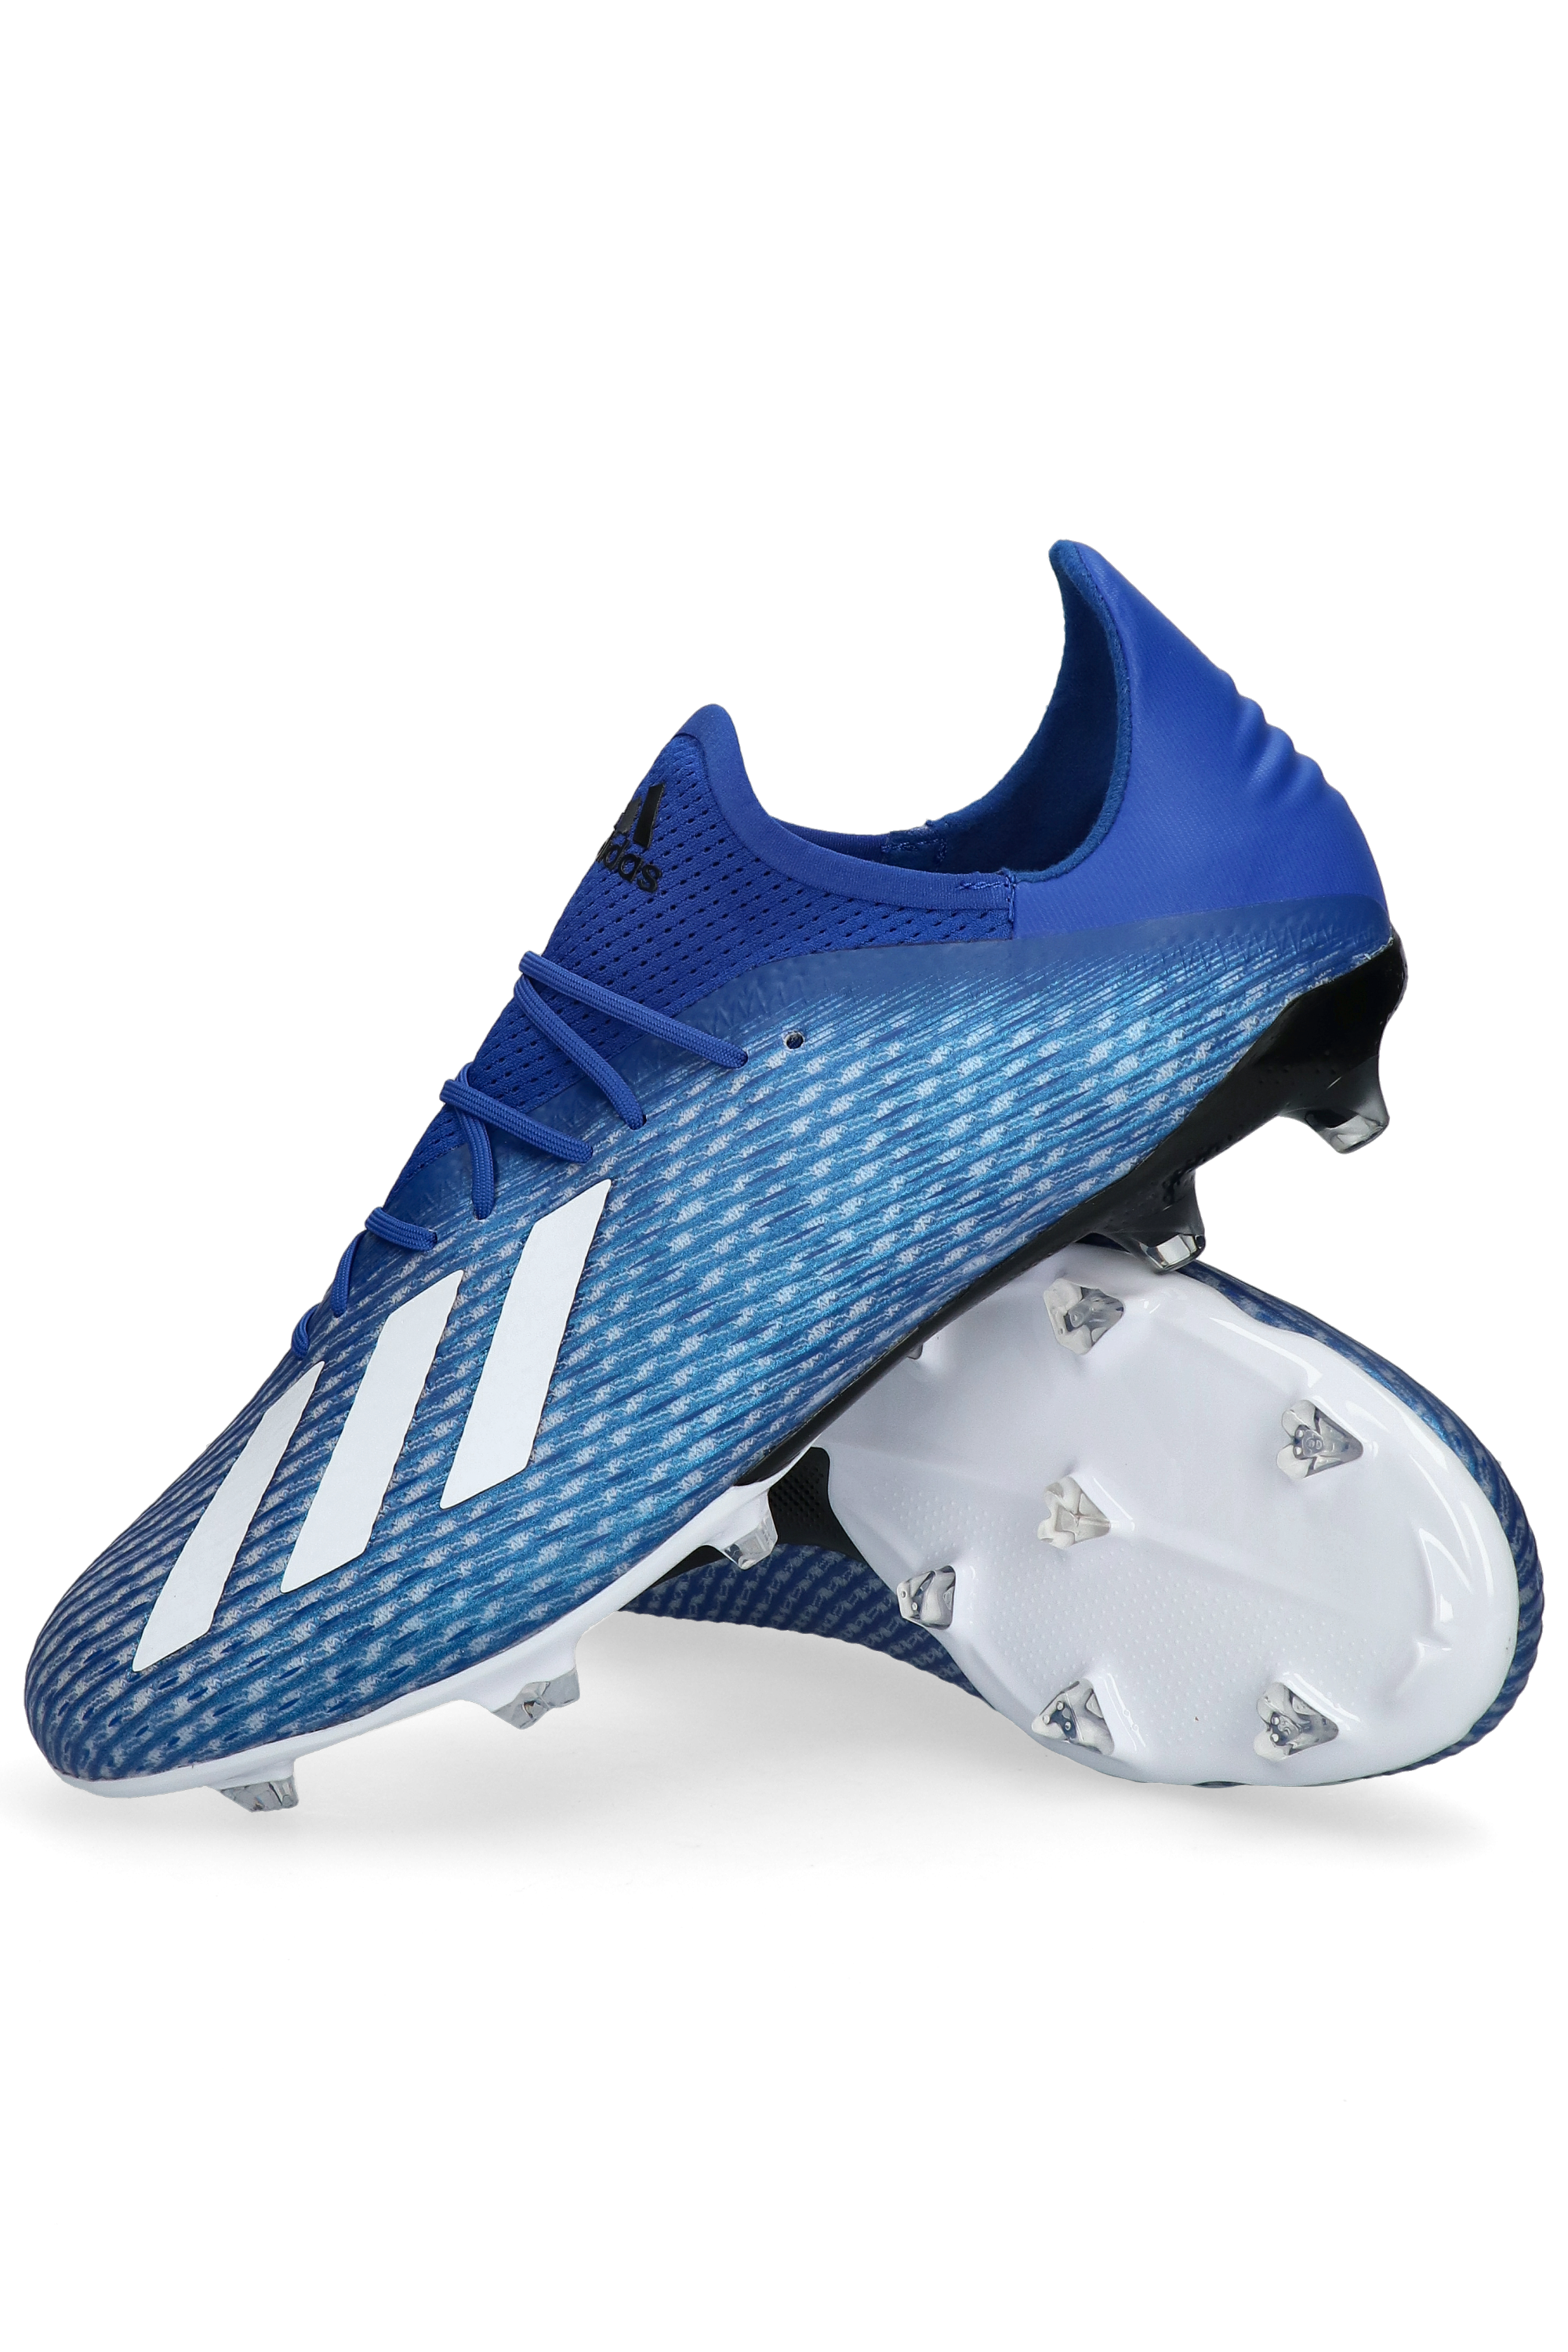 adidas X 19.2 FG Firm Ground Boots R-GOL.com - Football boots & equipment